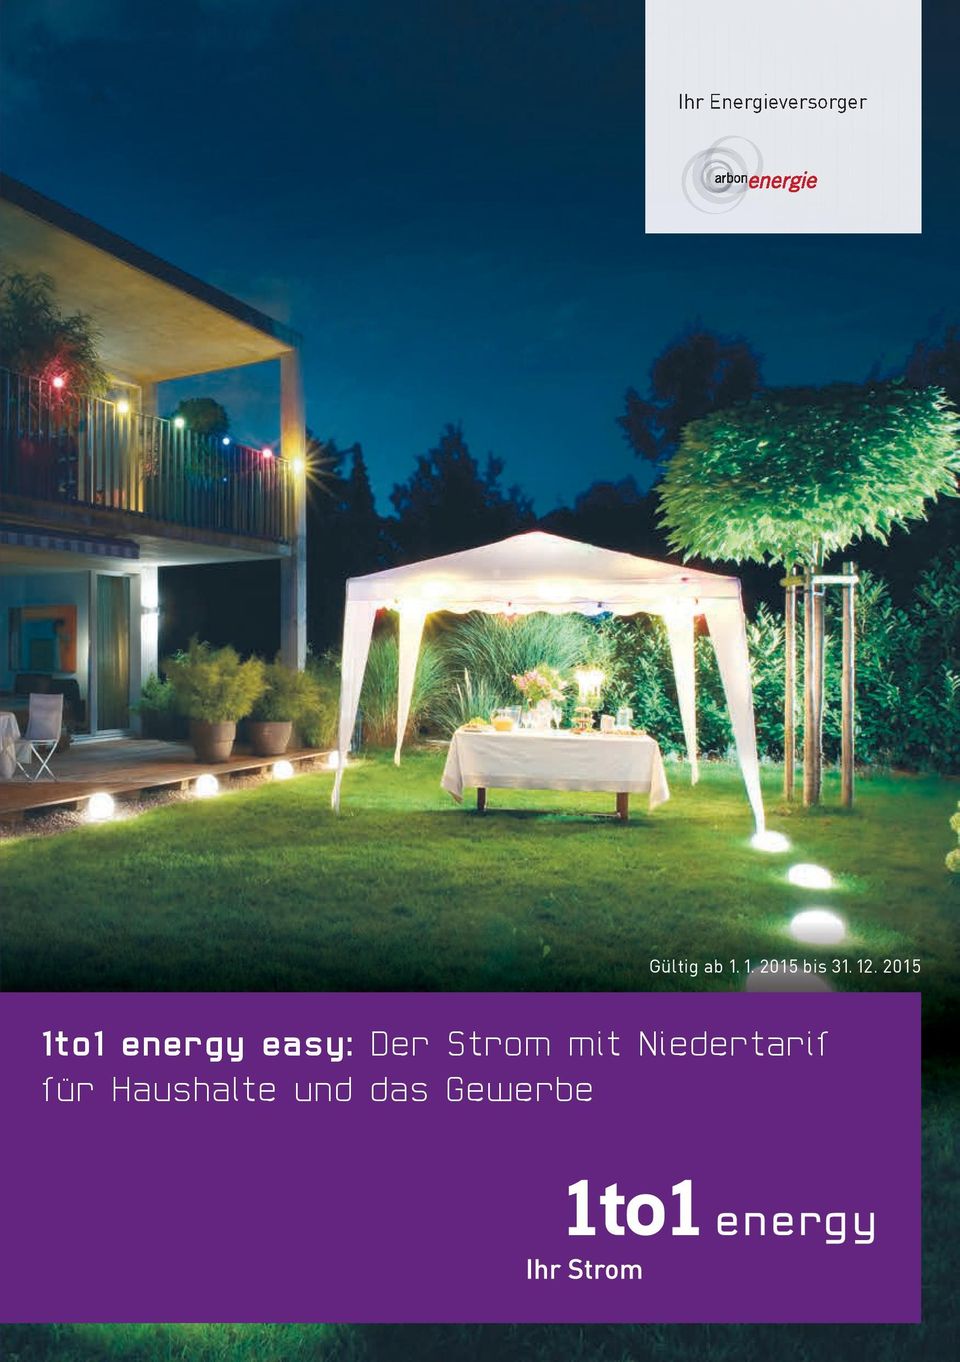 2015 1to1 energy easy: Der Strom